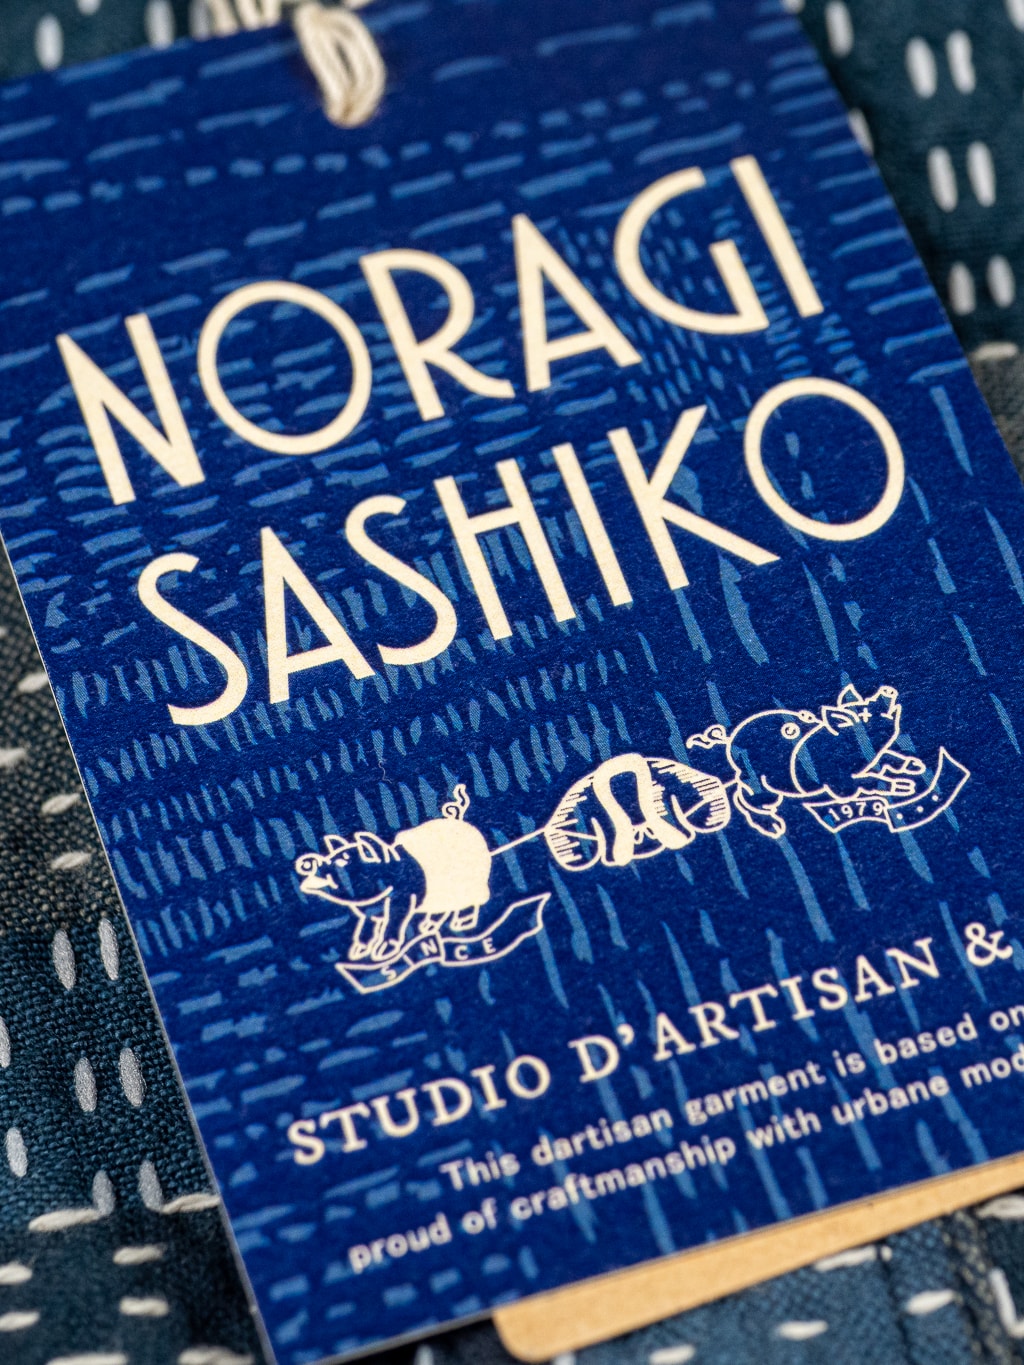 Studio D Artisan Nogari Sashiko Shirt label